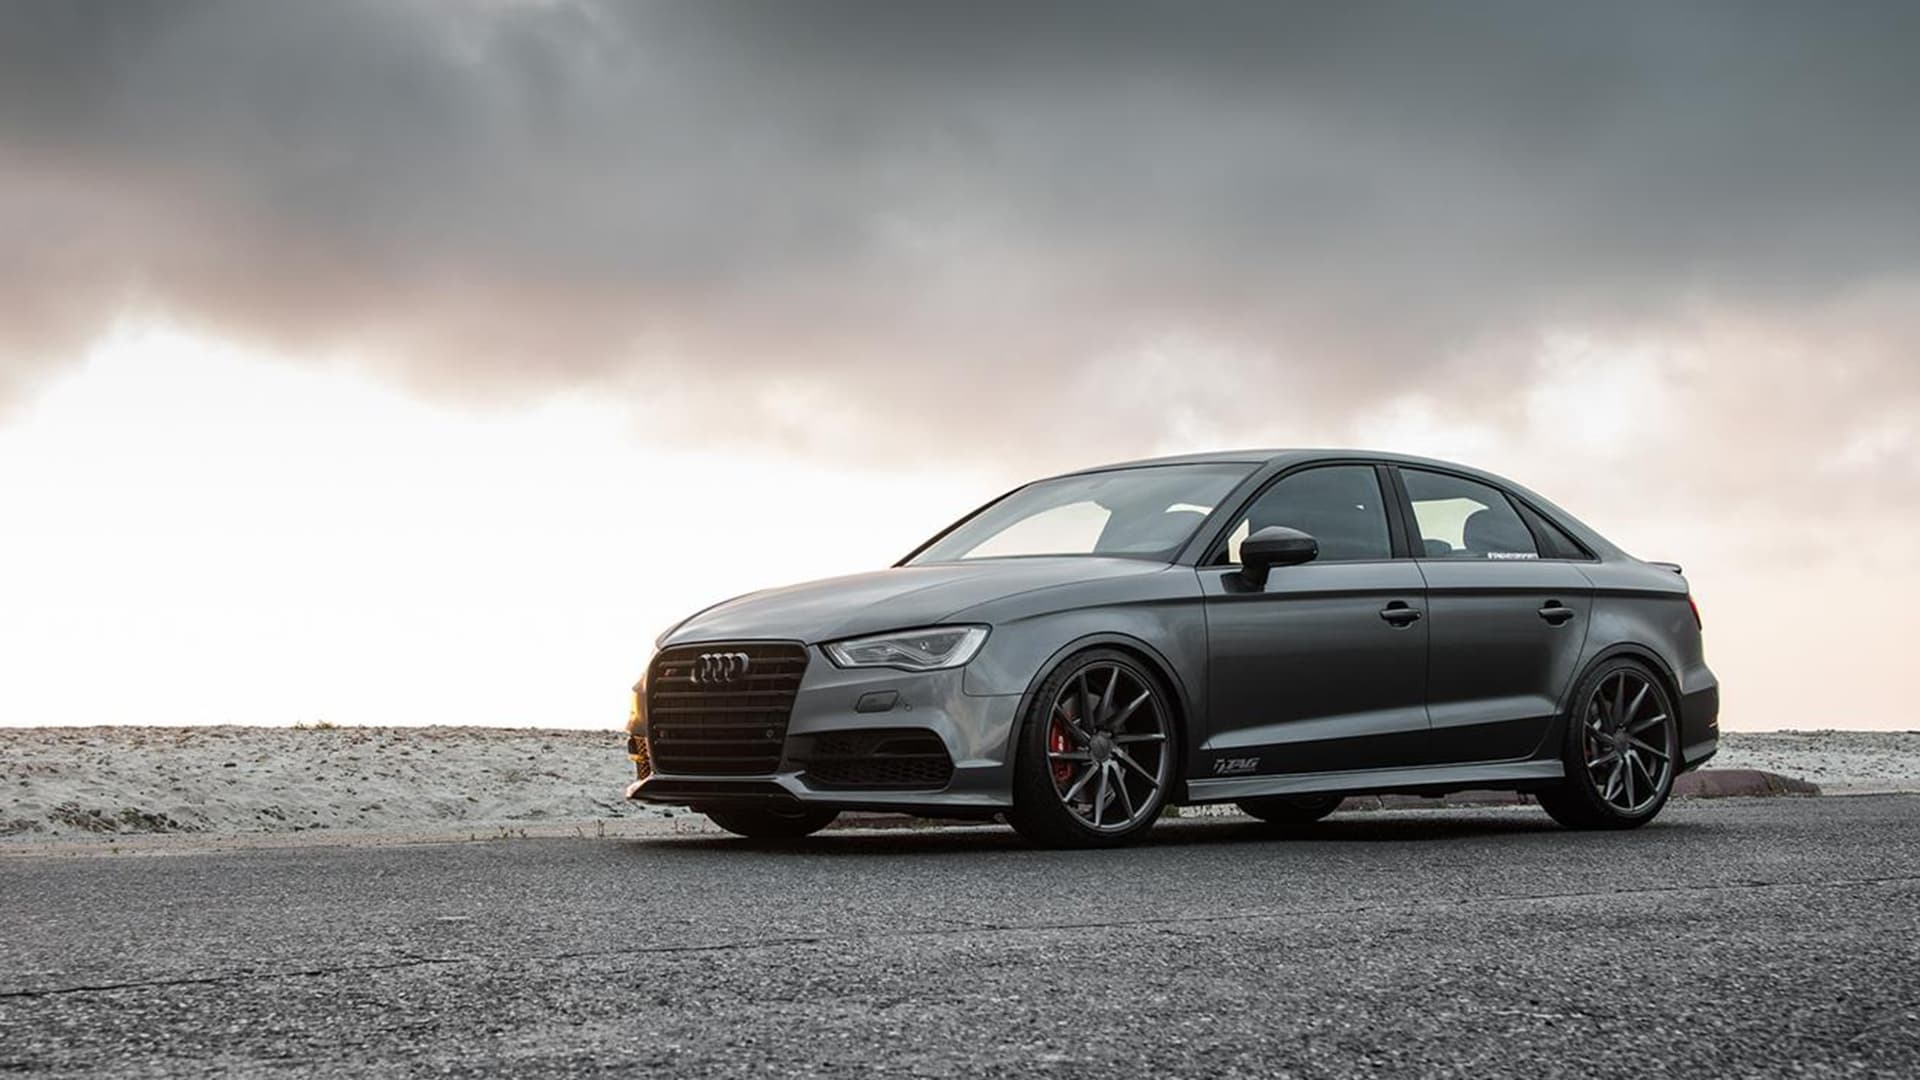 2015 Audi A3 Sedan has luxury, design, performance | Automotive Car Reviews#